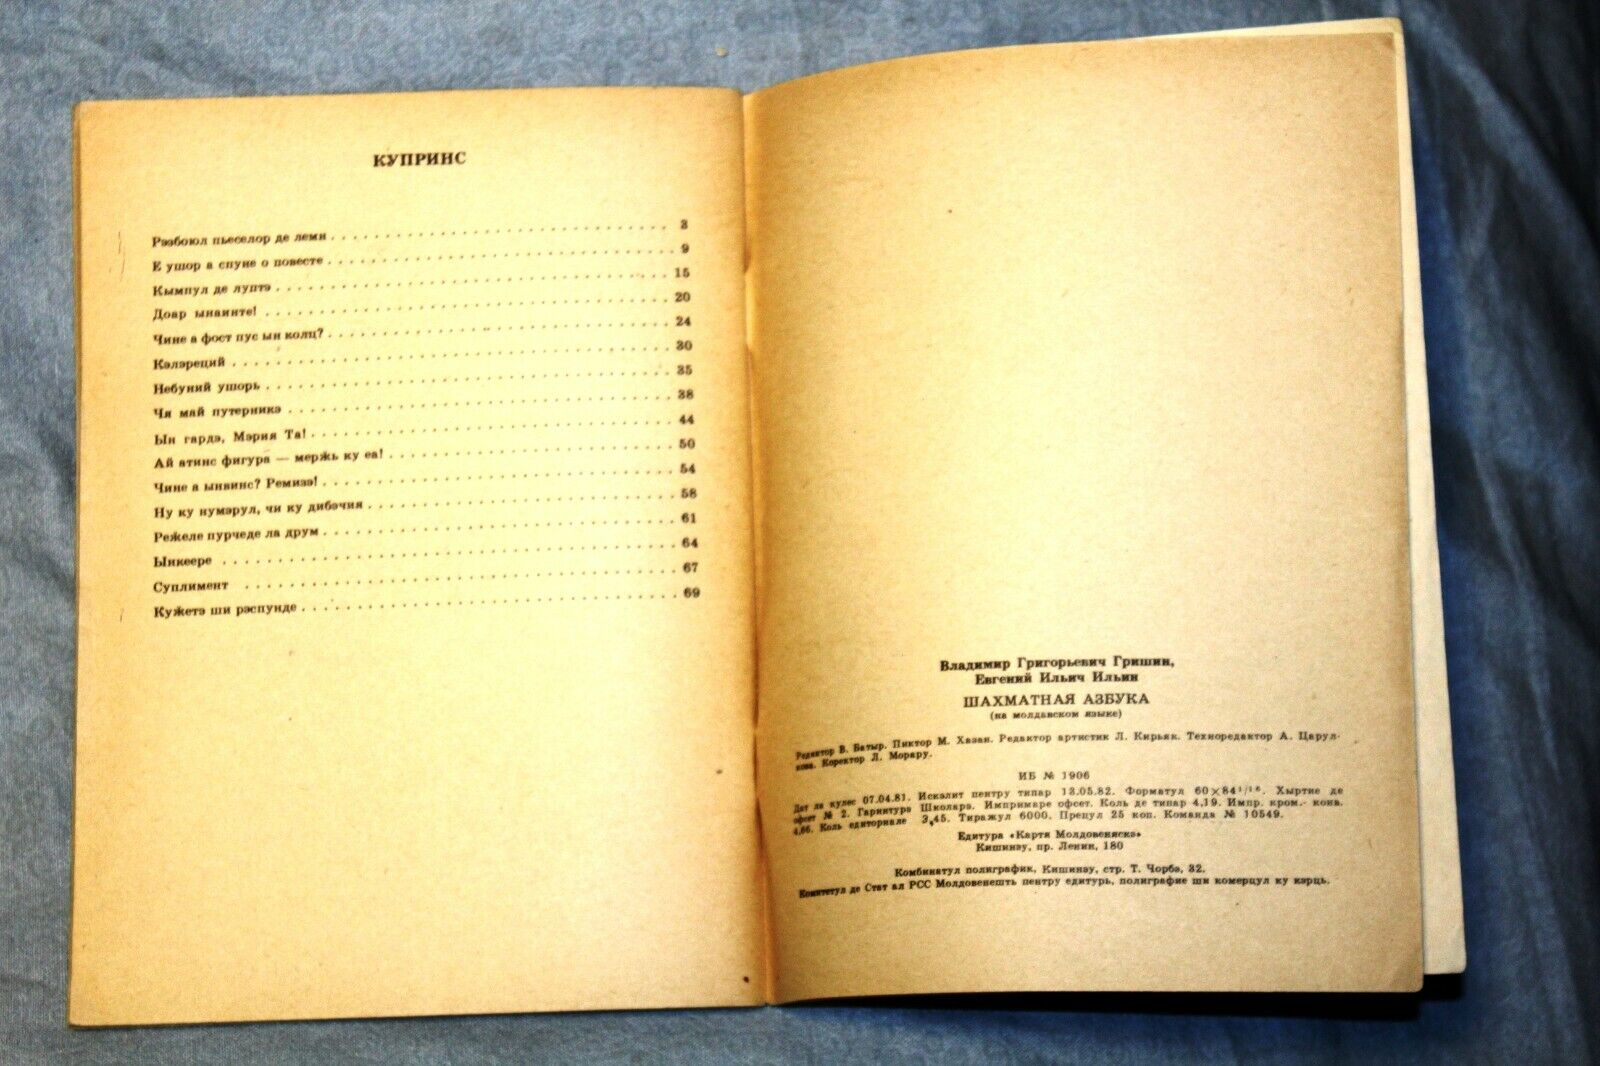 11694.Soviet Chess Book in Moldovan. Chess alphabet. Grishin, Ilyin. Kishinev, 1982